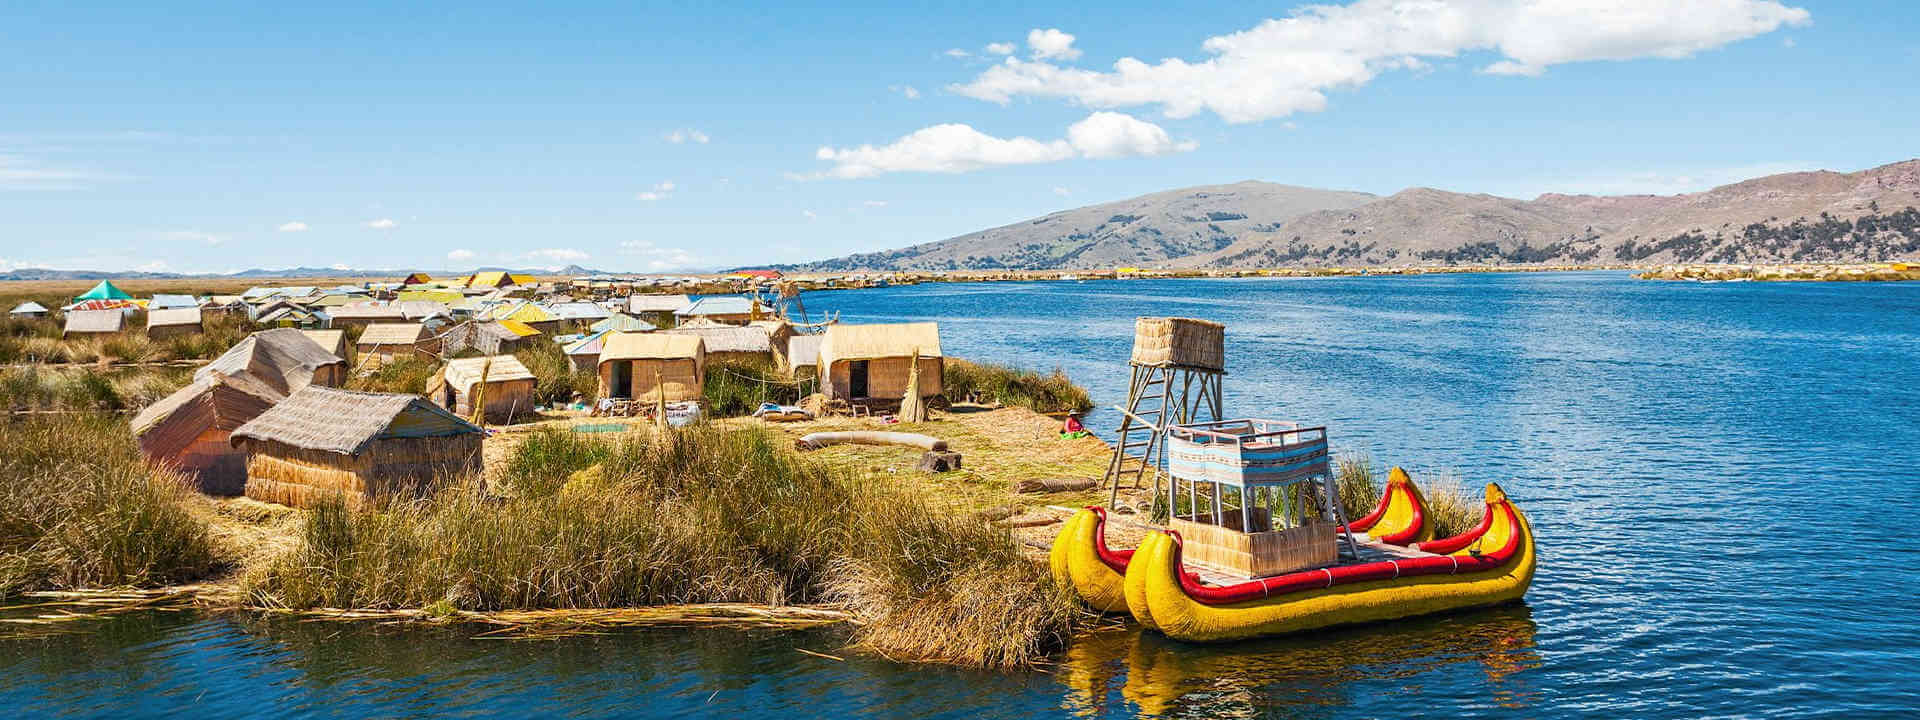 lago-titicaca-peru-alma-livre-viagens-1920x720